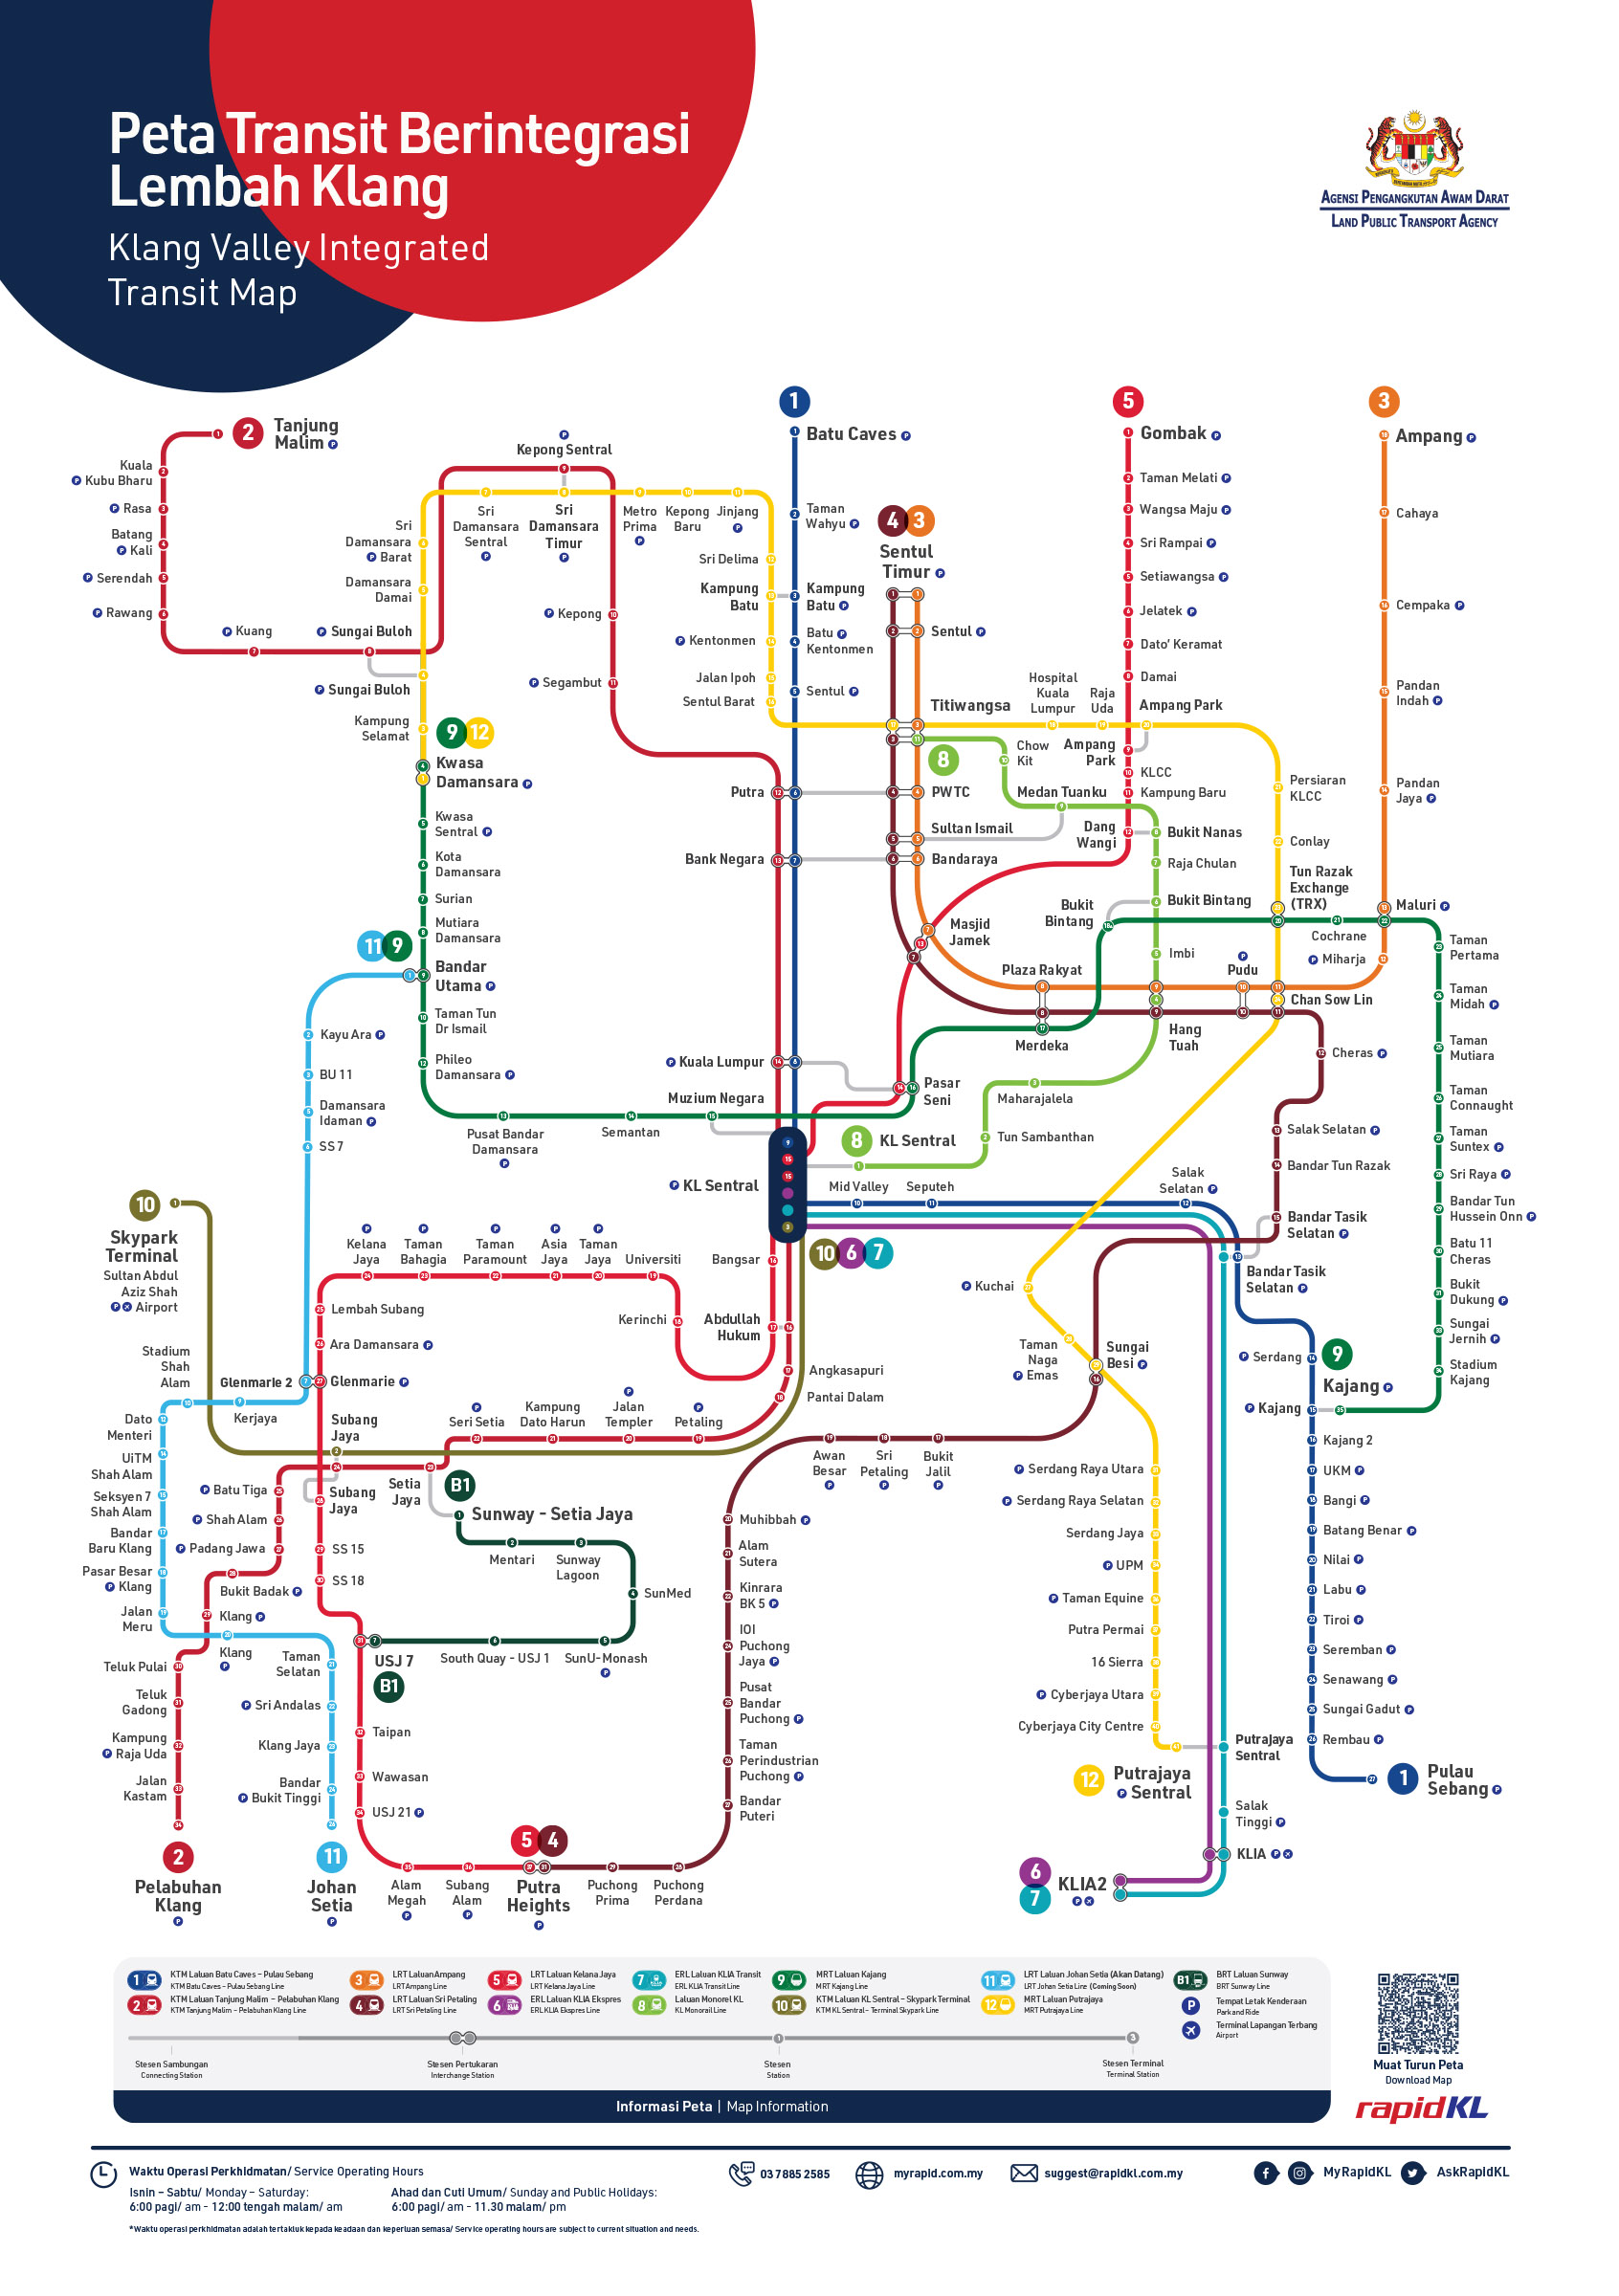 Malaysia Metro Map Transit Map Train Map Subway Map | Images and Photos ...